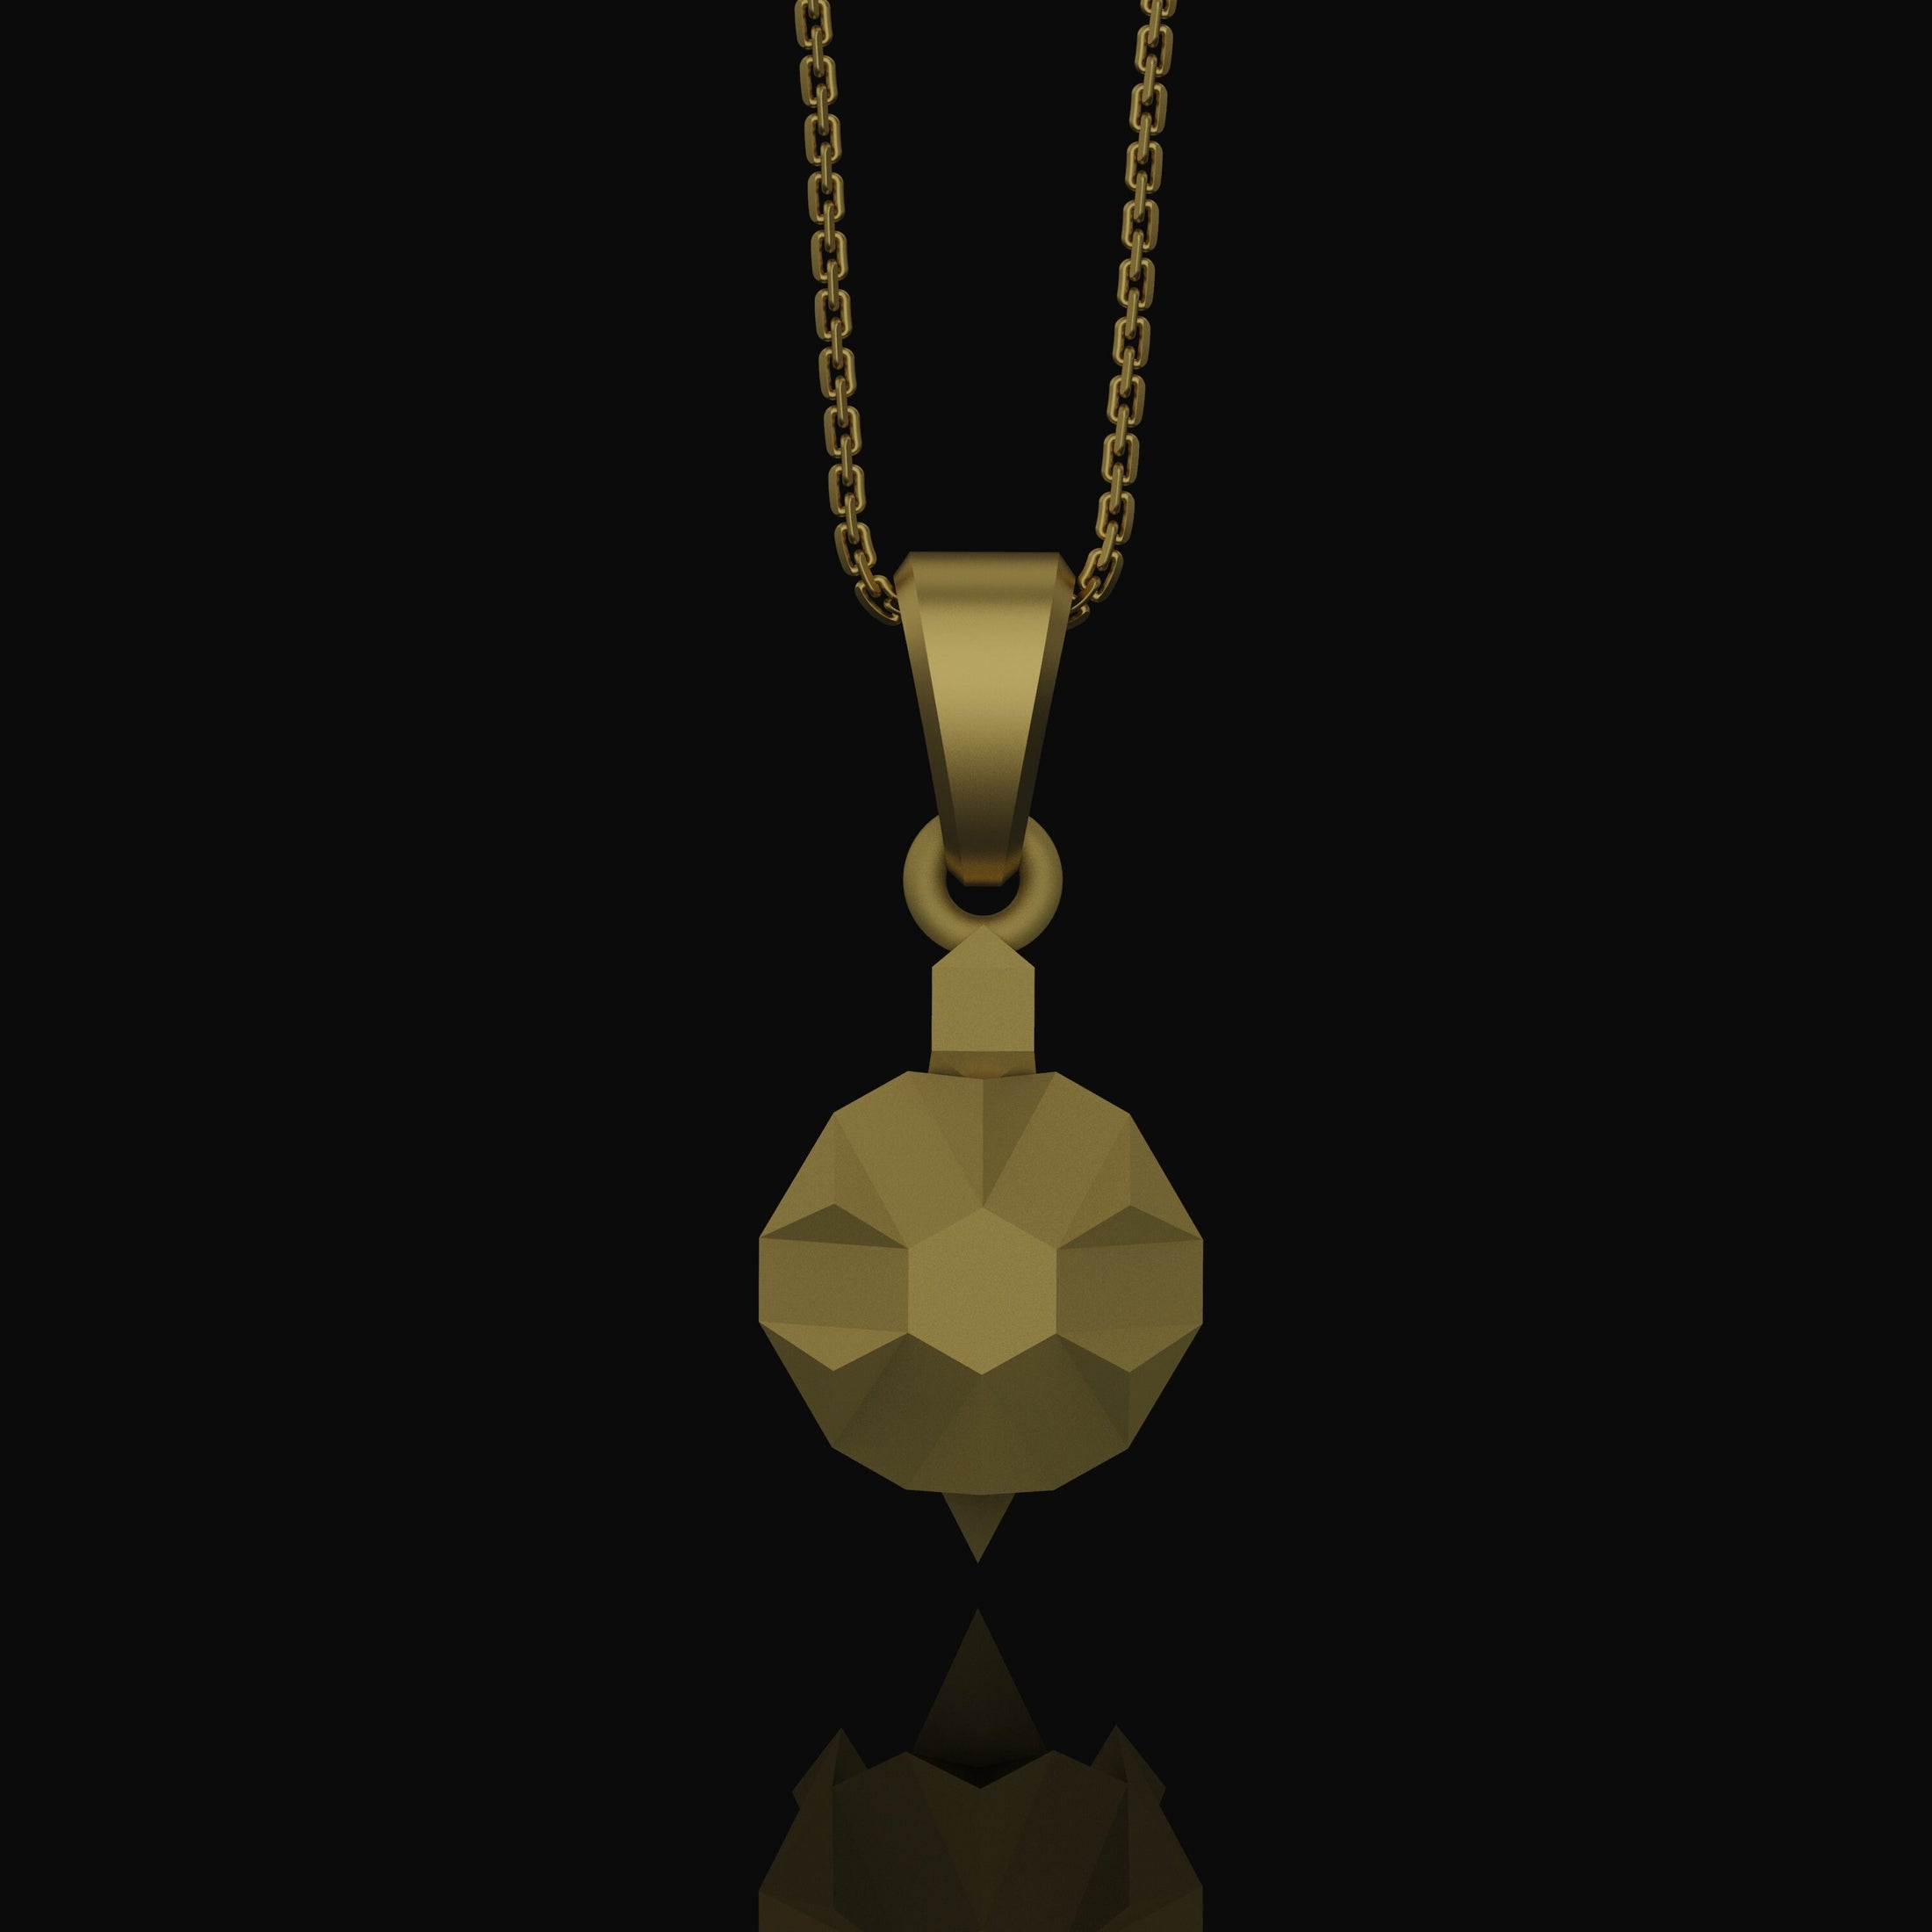 Origami Tortoise Charm Necklace - Silver Geometrical Pendant, Elegant Folded Turtle Design, Unique Artistic Jewelry Gold Matte